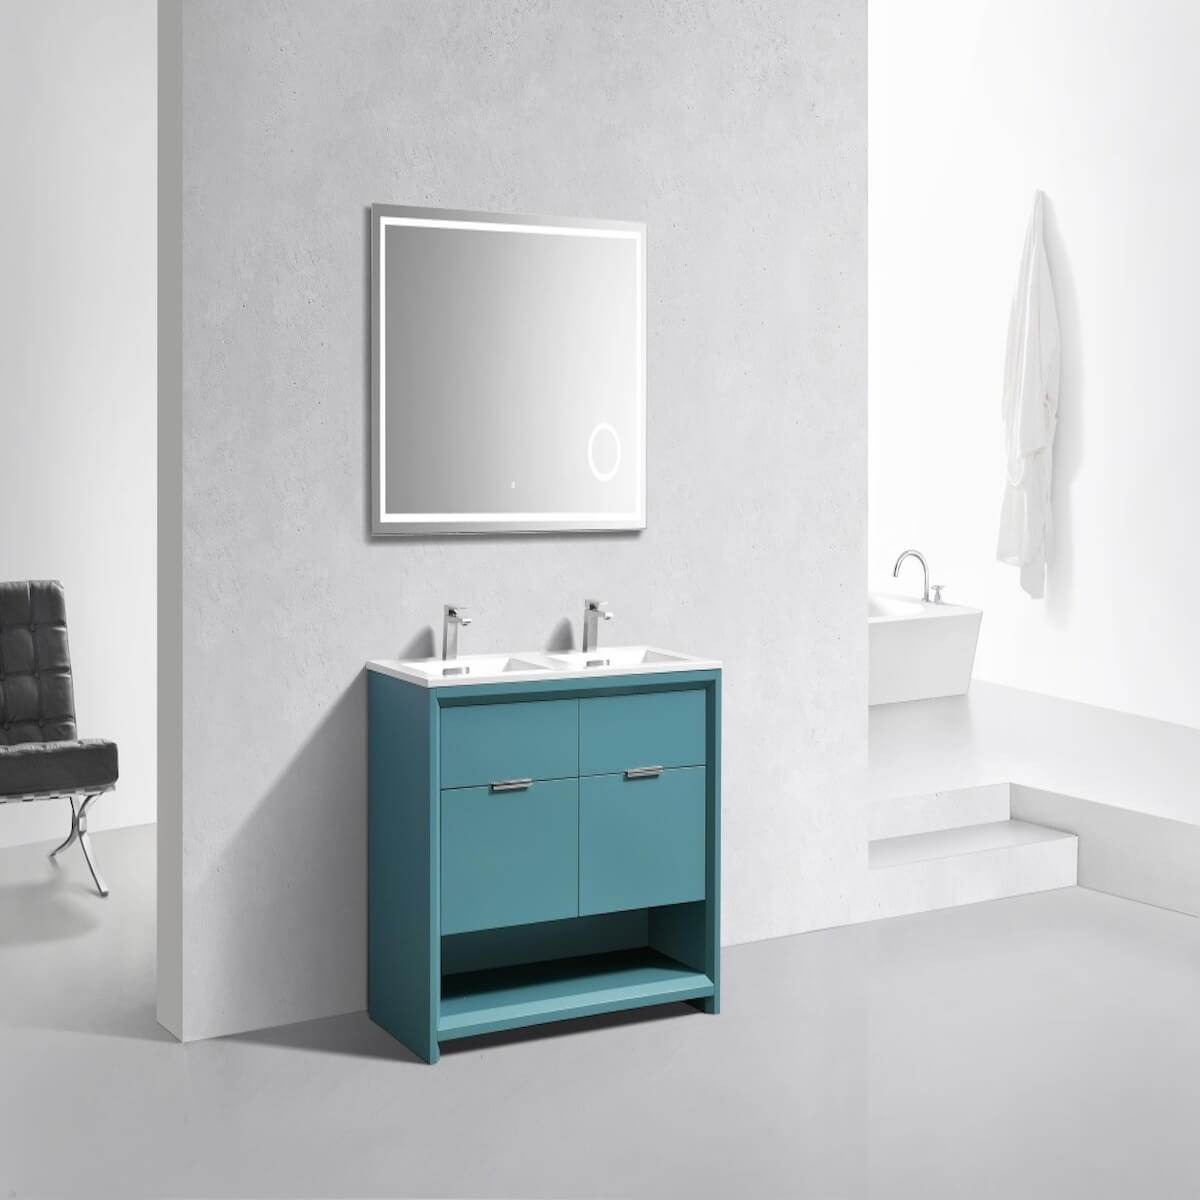 KubeBath Nudo 48" Teal Green Double Sink Free Standing Modern Bathroom Vanity Side in Bathroom NUDO48D-TG #finish_teal green